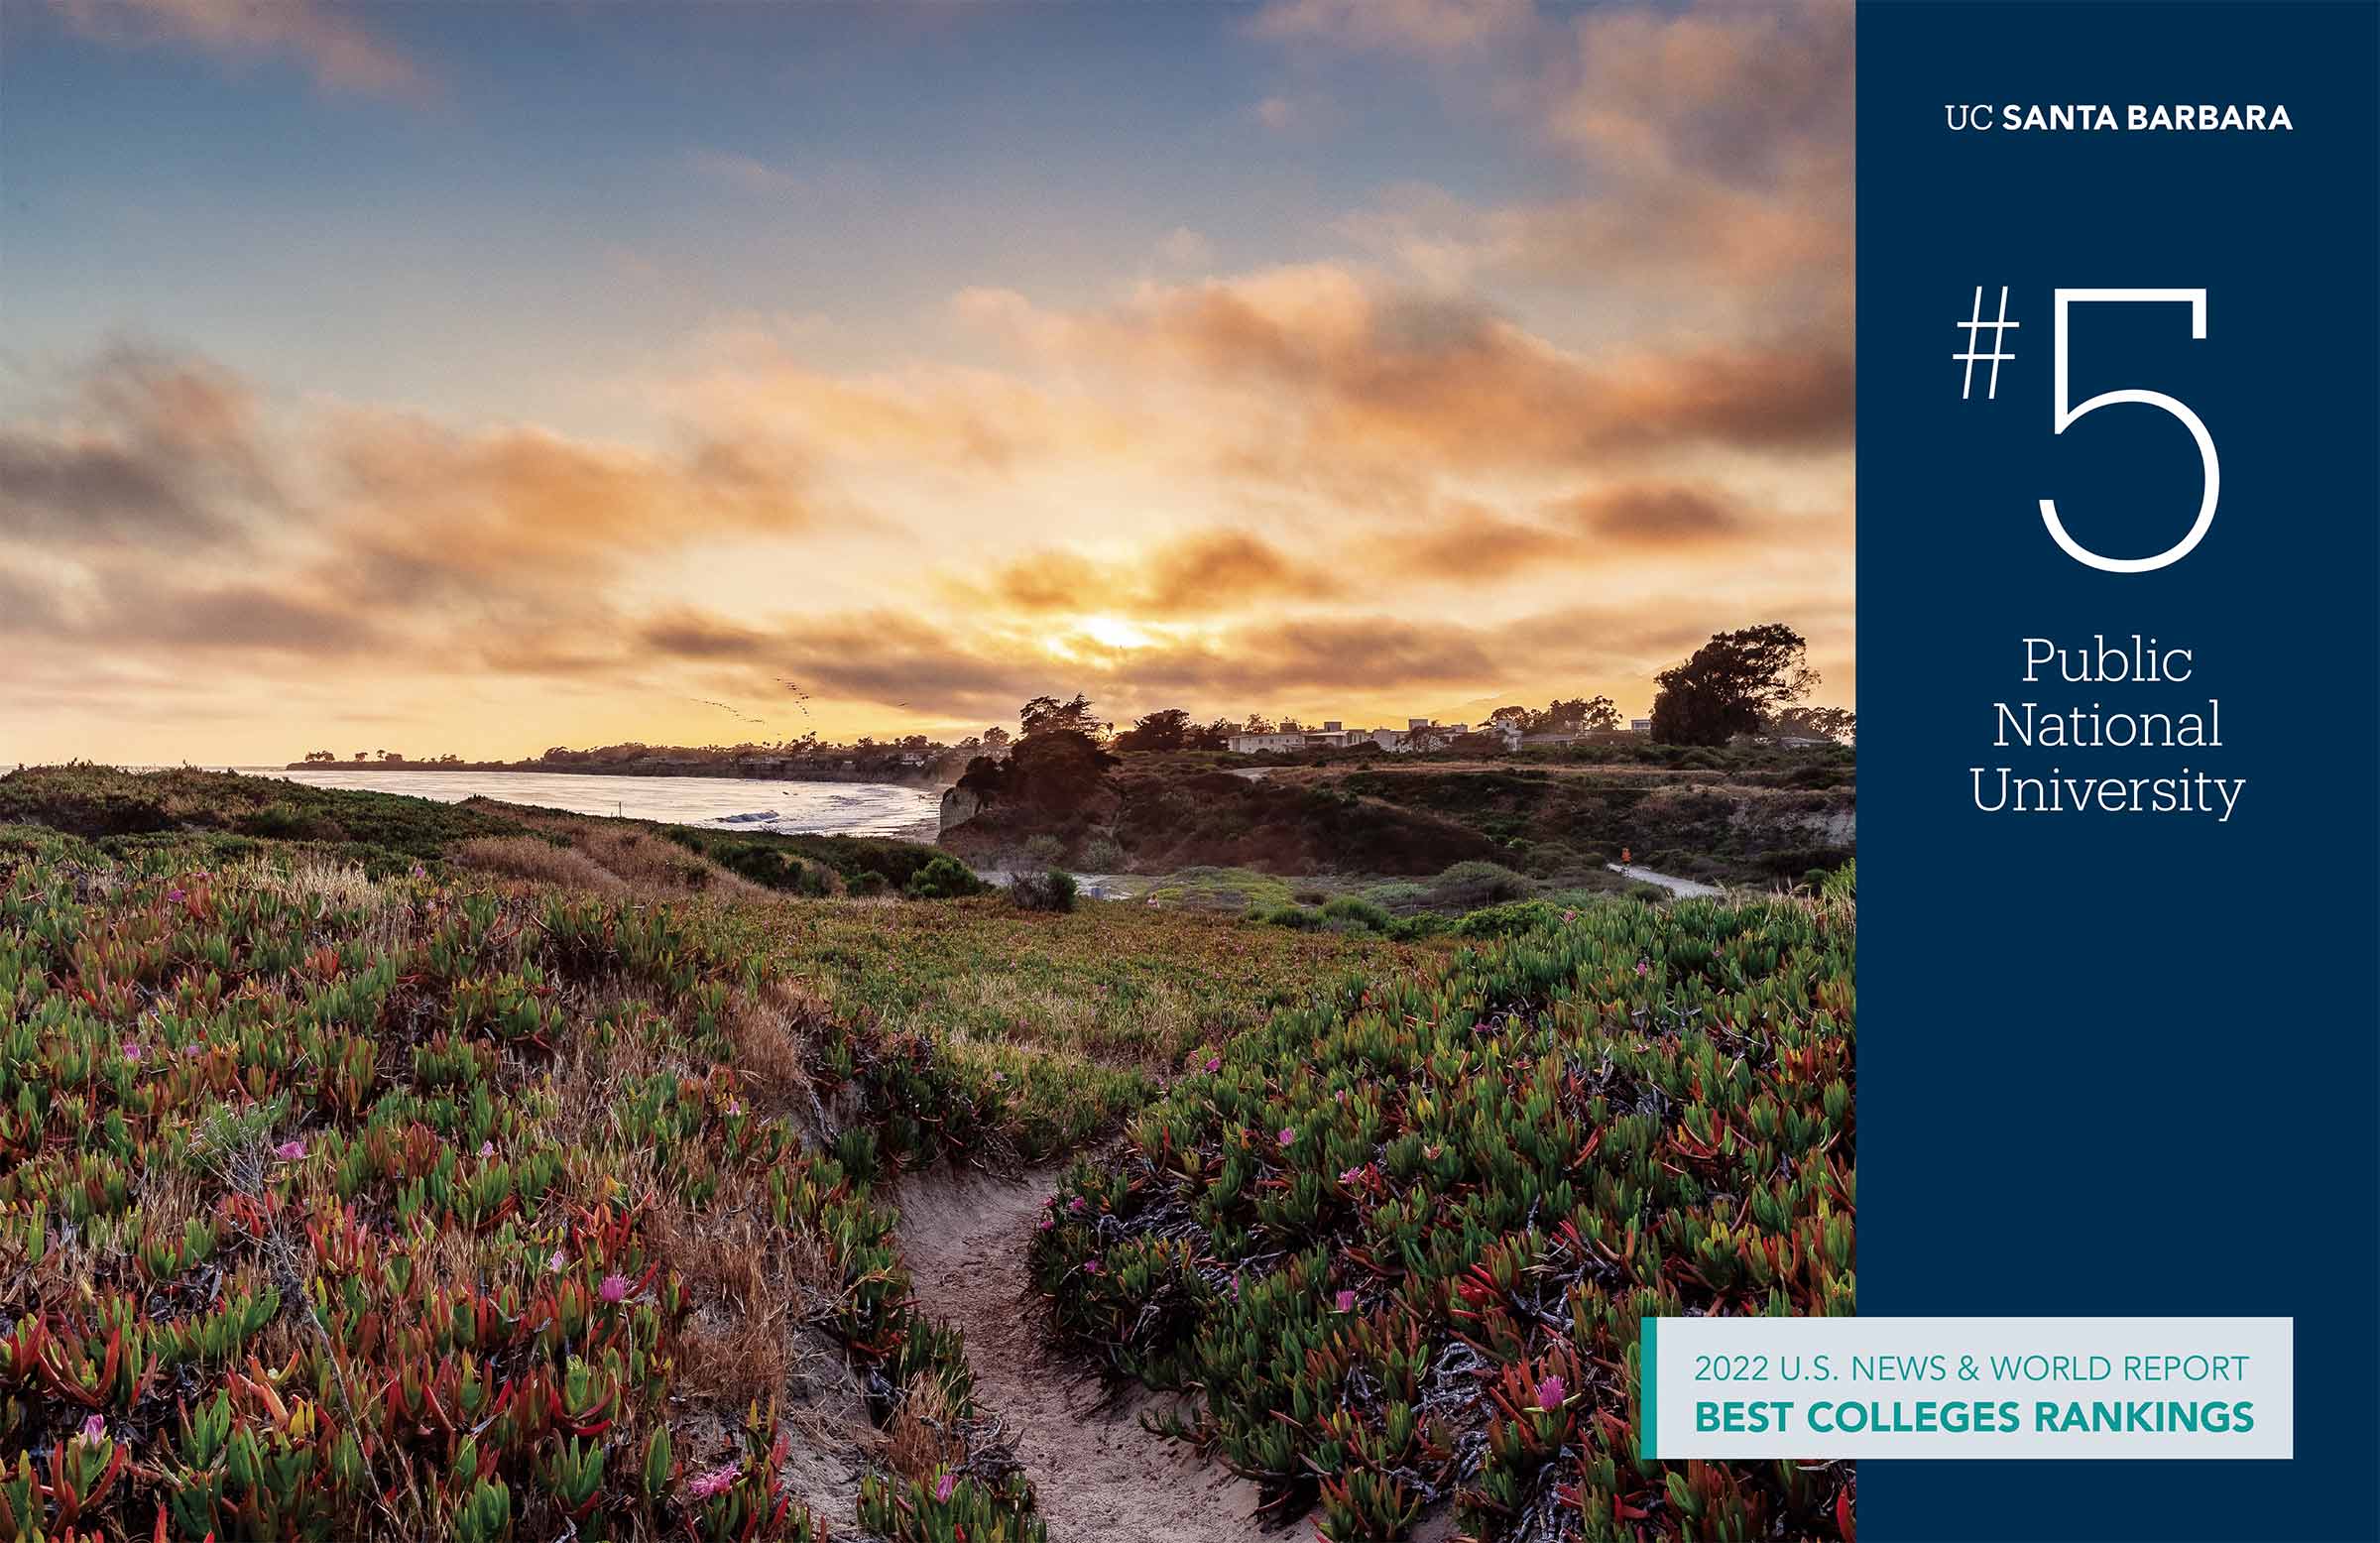 UC Santa Barbara was ranked top 5 Public National University